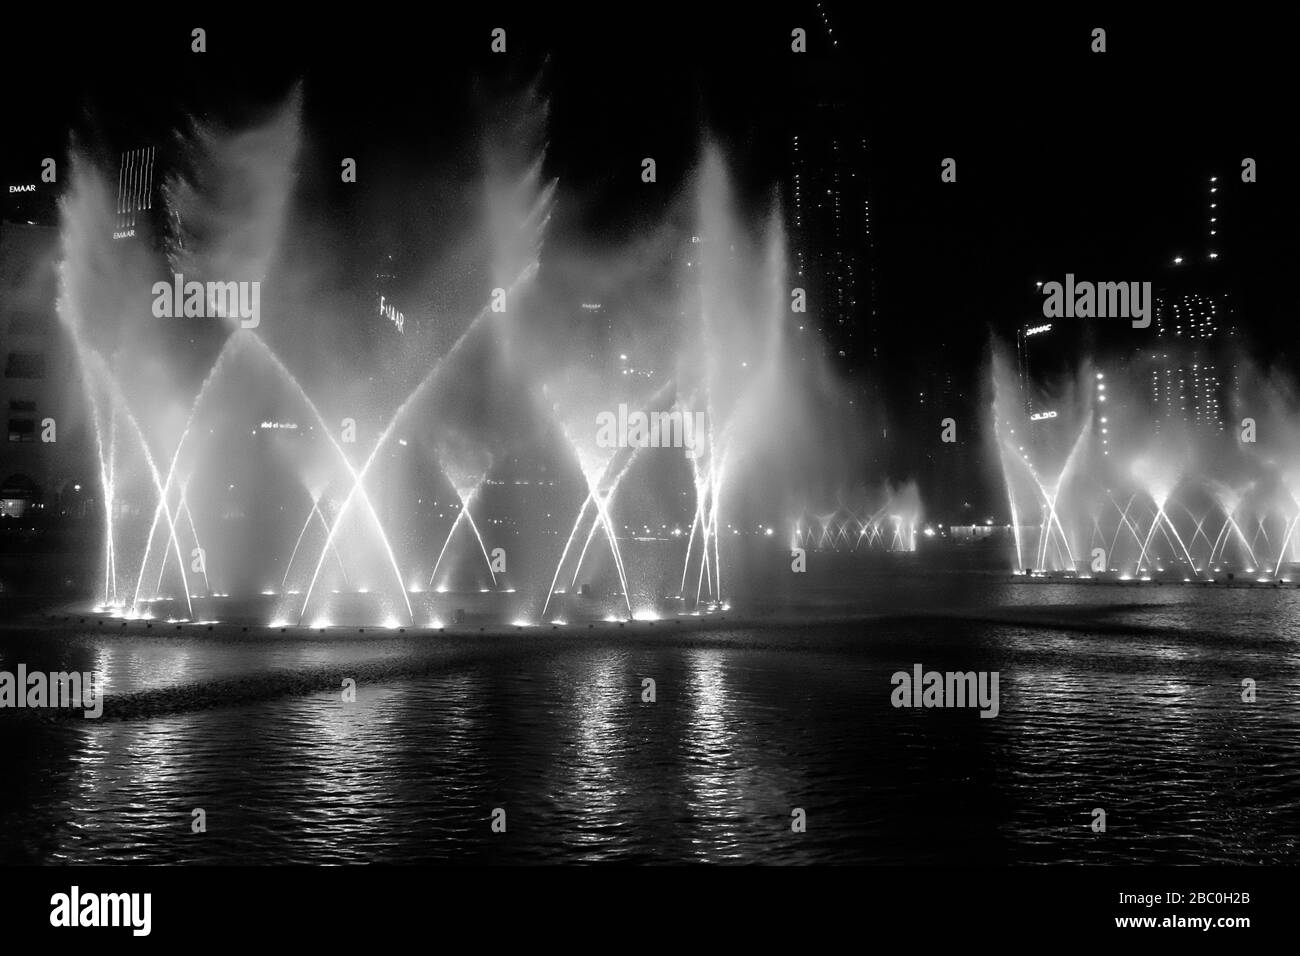 The world's largest choreographed fountain system in Dubai, United Arab Emirates. Stock Photo